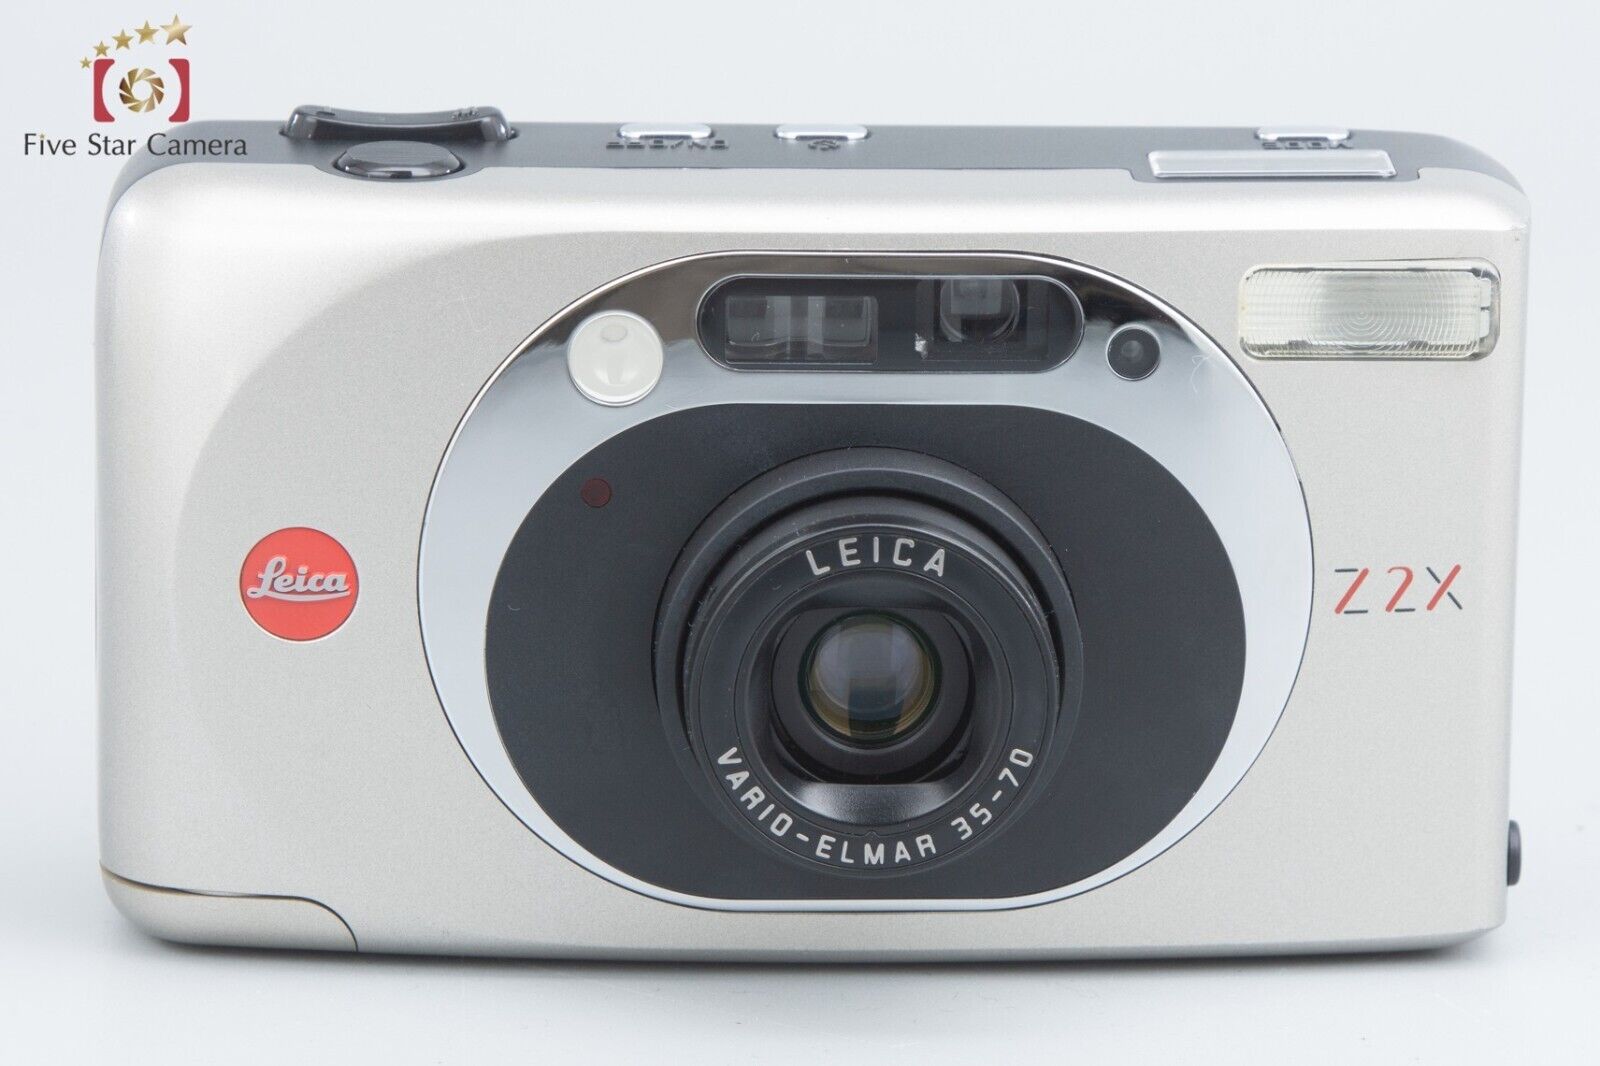 Leica Z2X Silver 35mm Point & Shoot Film Camera